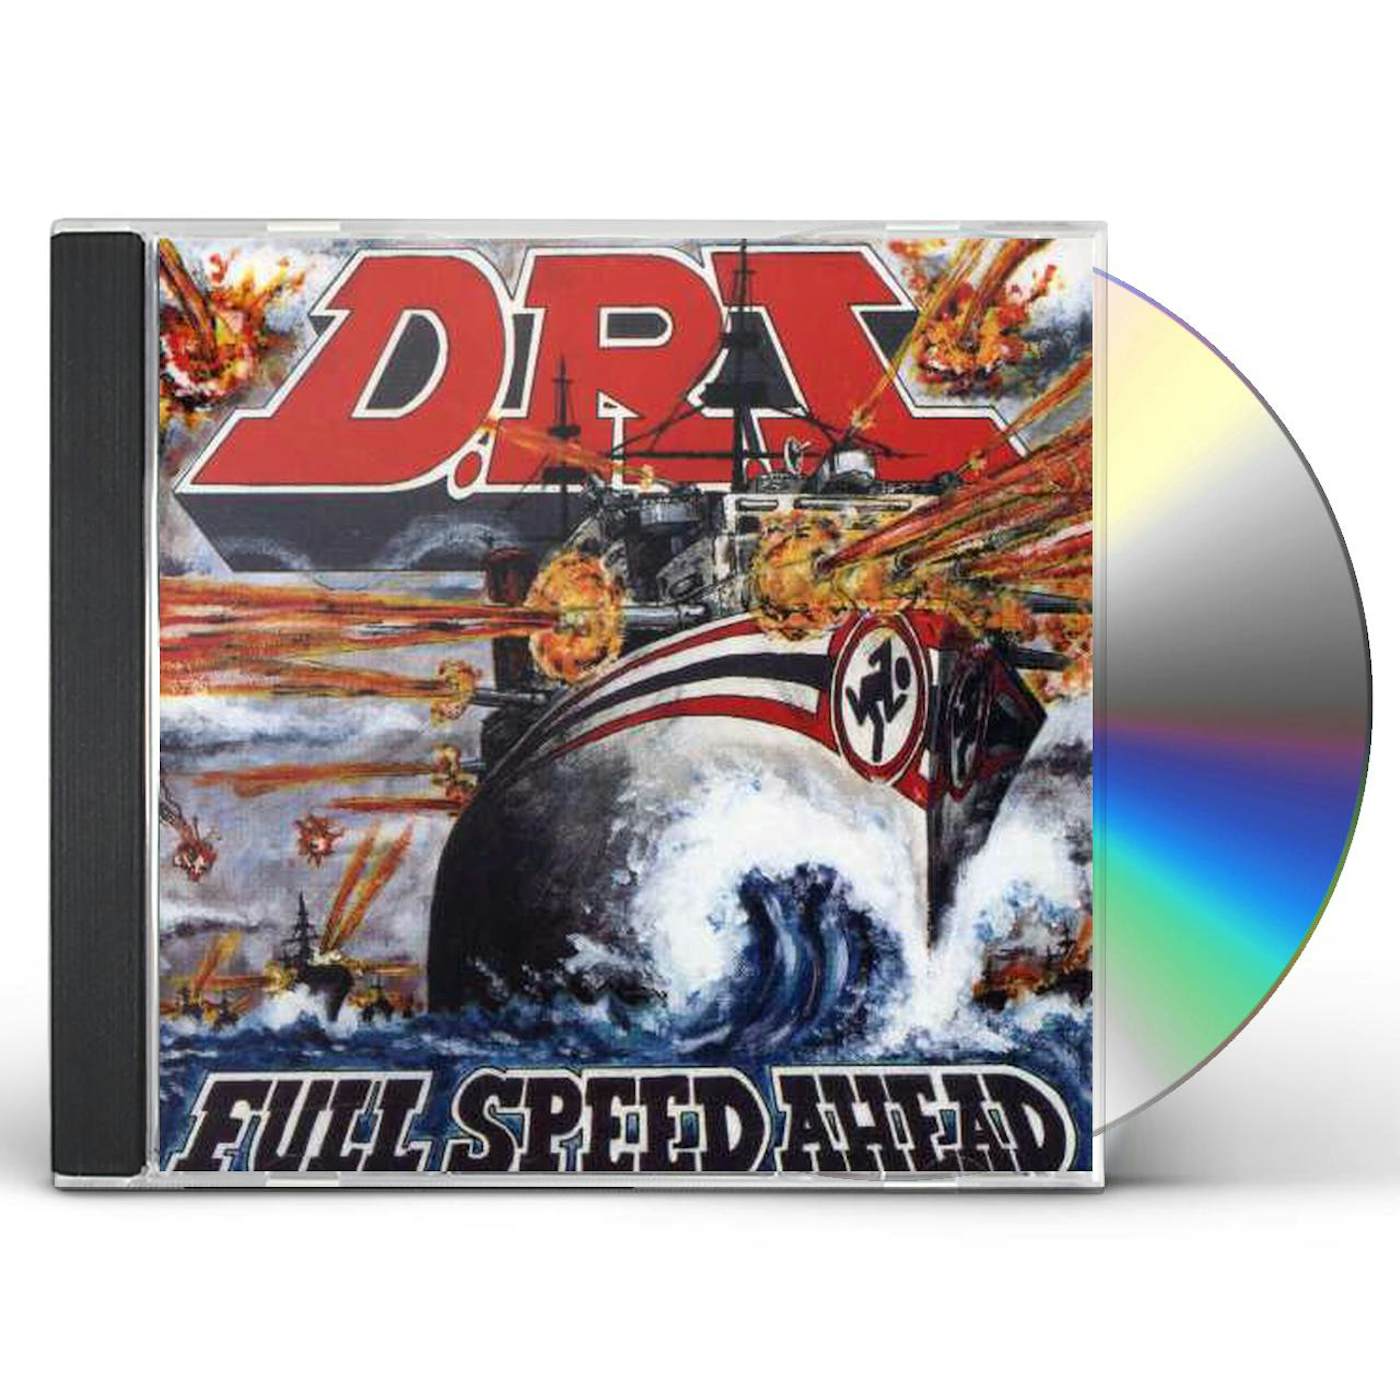 D.R.I. FULL SPEED AHEAD CD